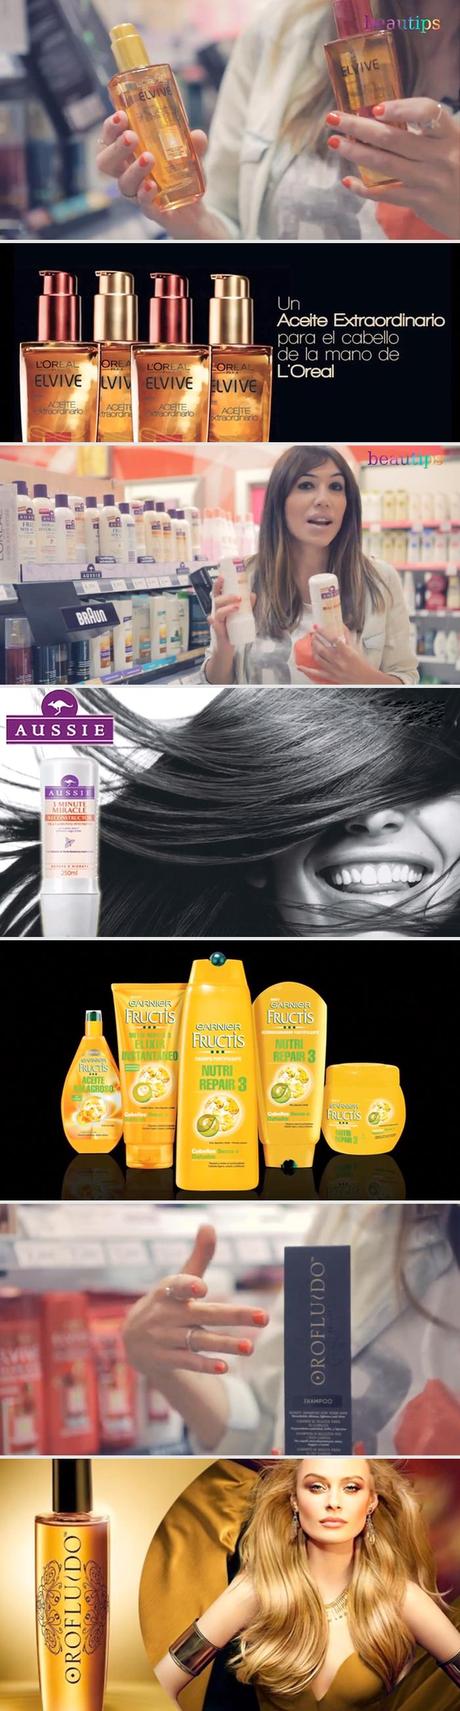 beautips: summer hair care